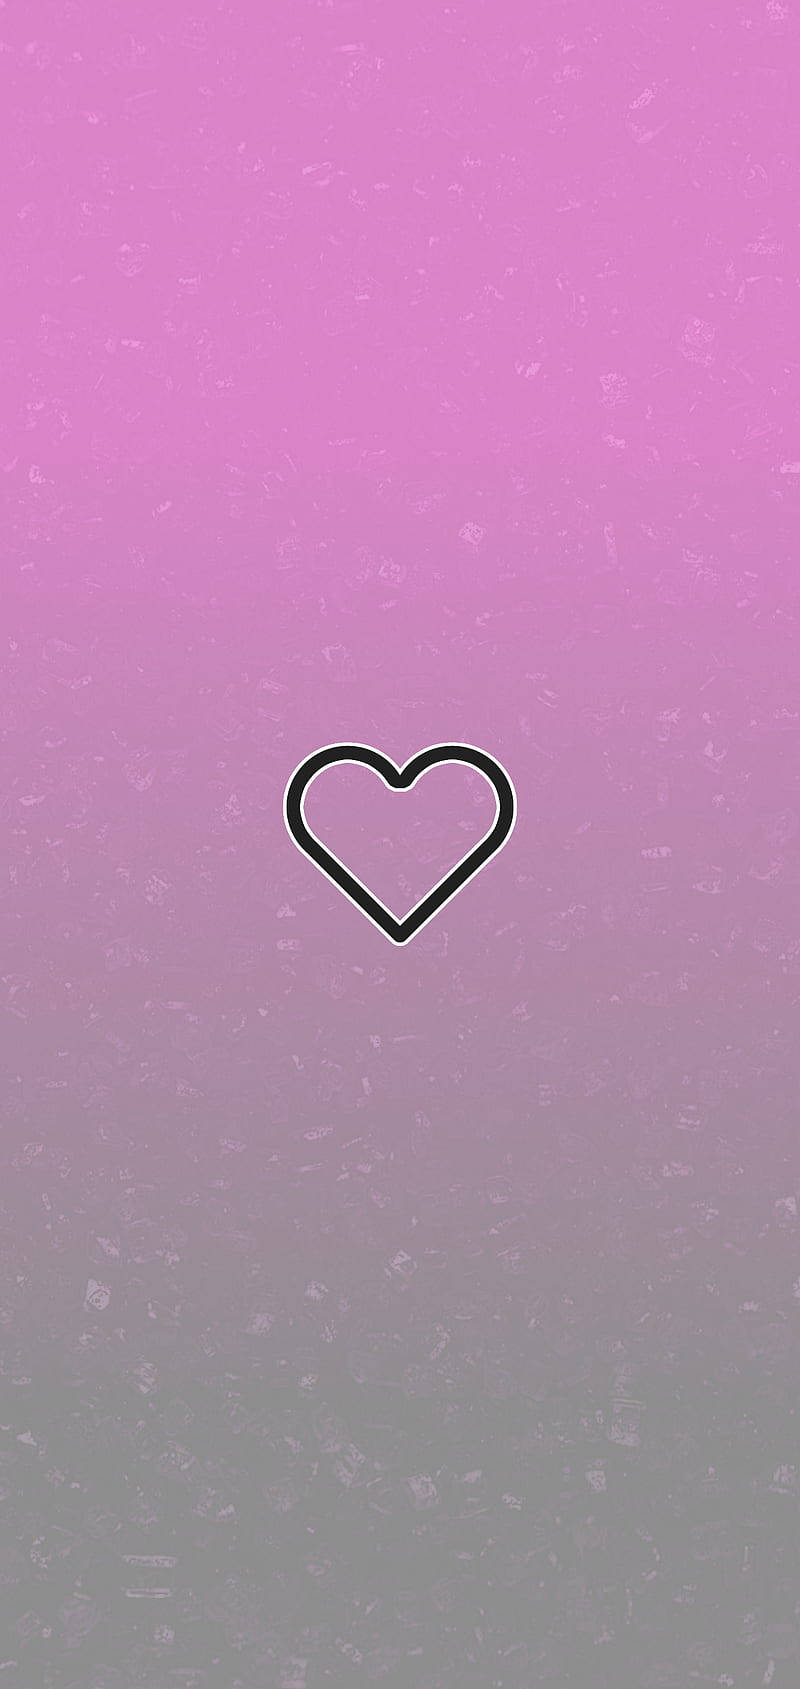 Cute Instagram Heart On Gradient Background Wallpaper